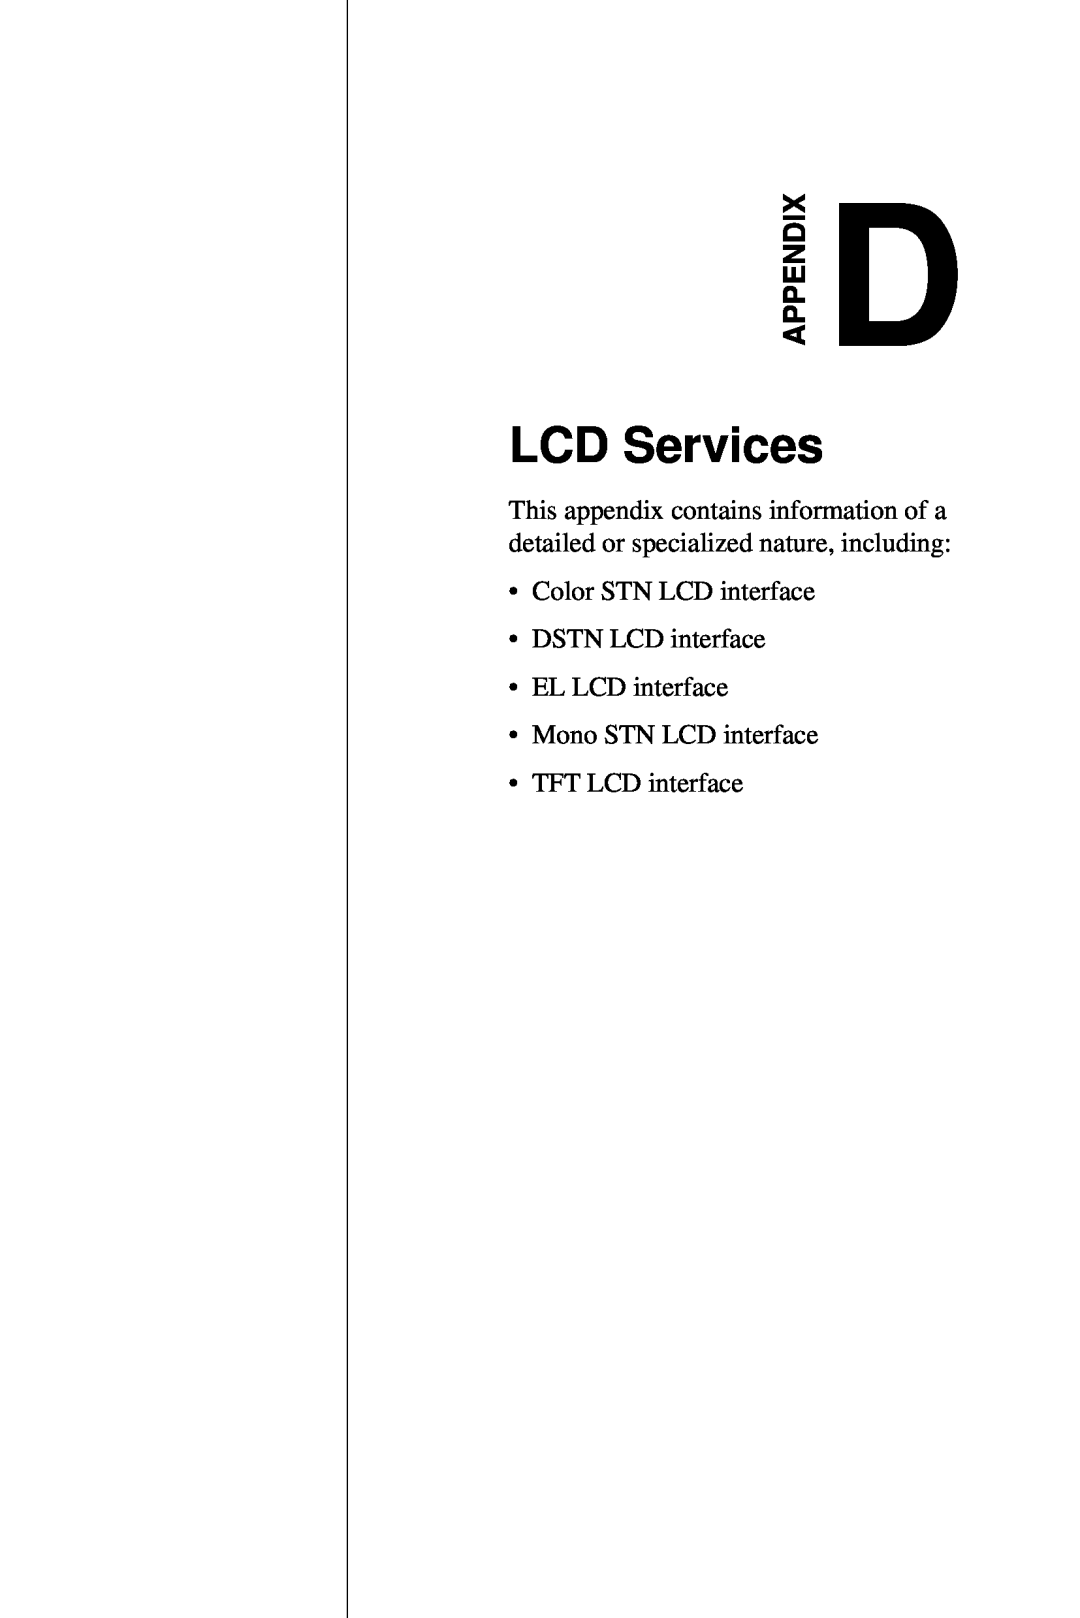 Advantech PCA-6359 user manual LCD Services, Appendix 